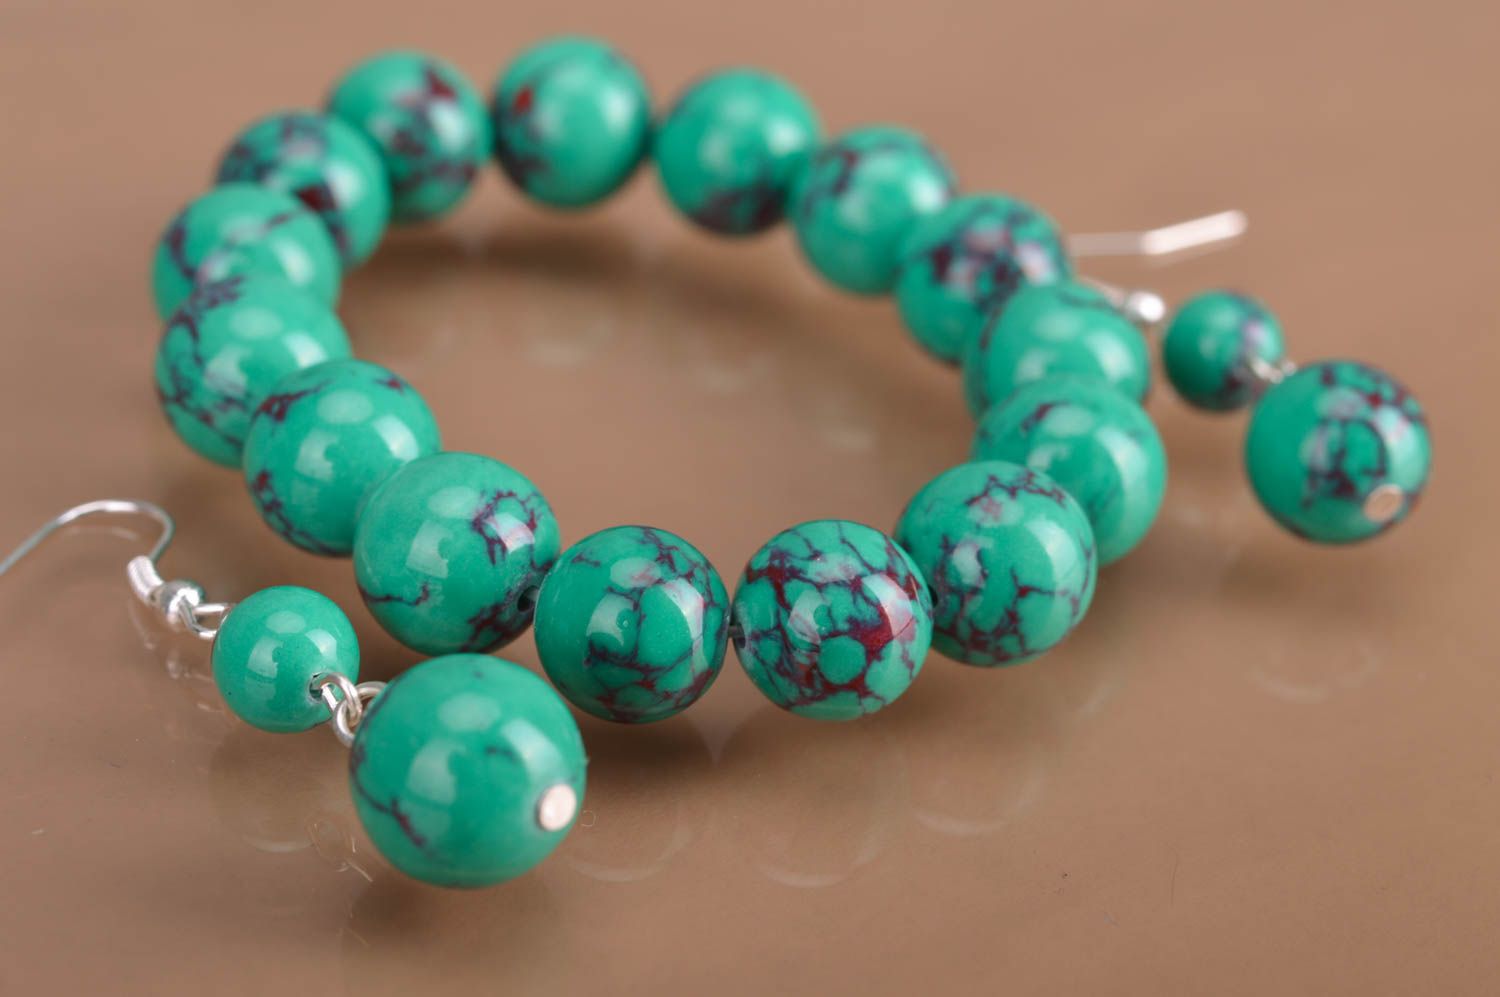 Handmade designer turquoise color beaded jewelry set wrist bracelet and earrings photo 1